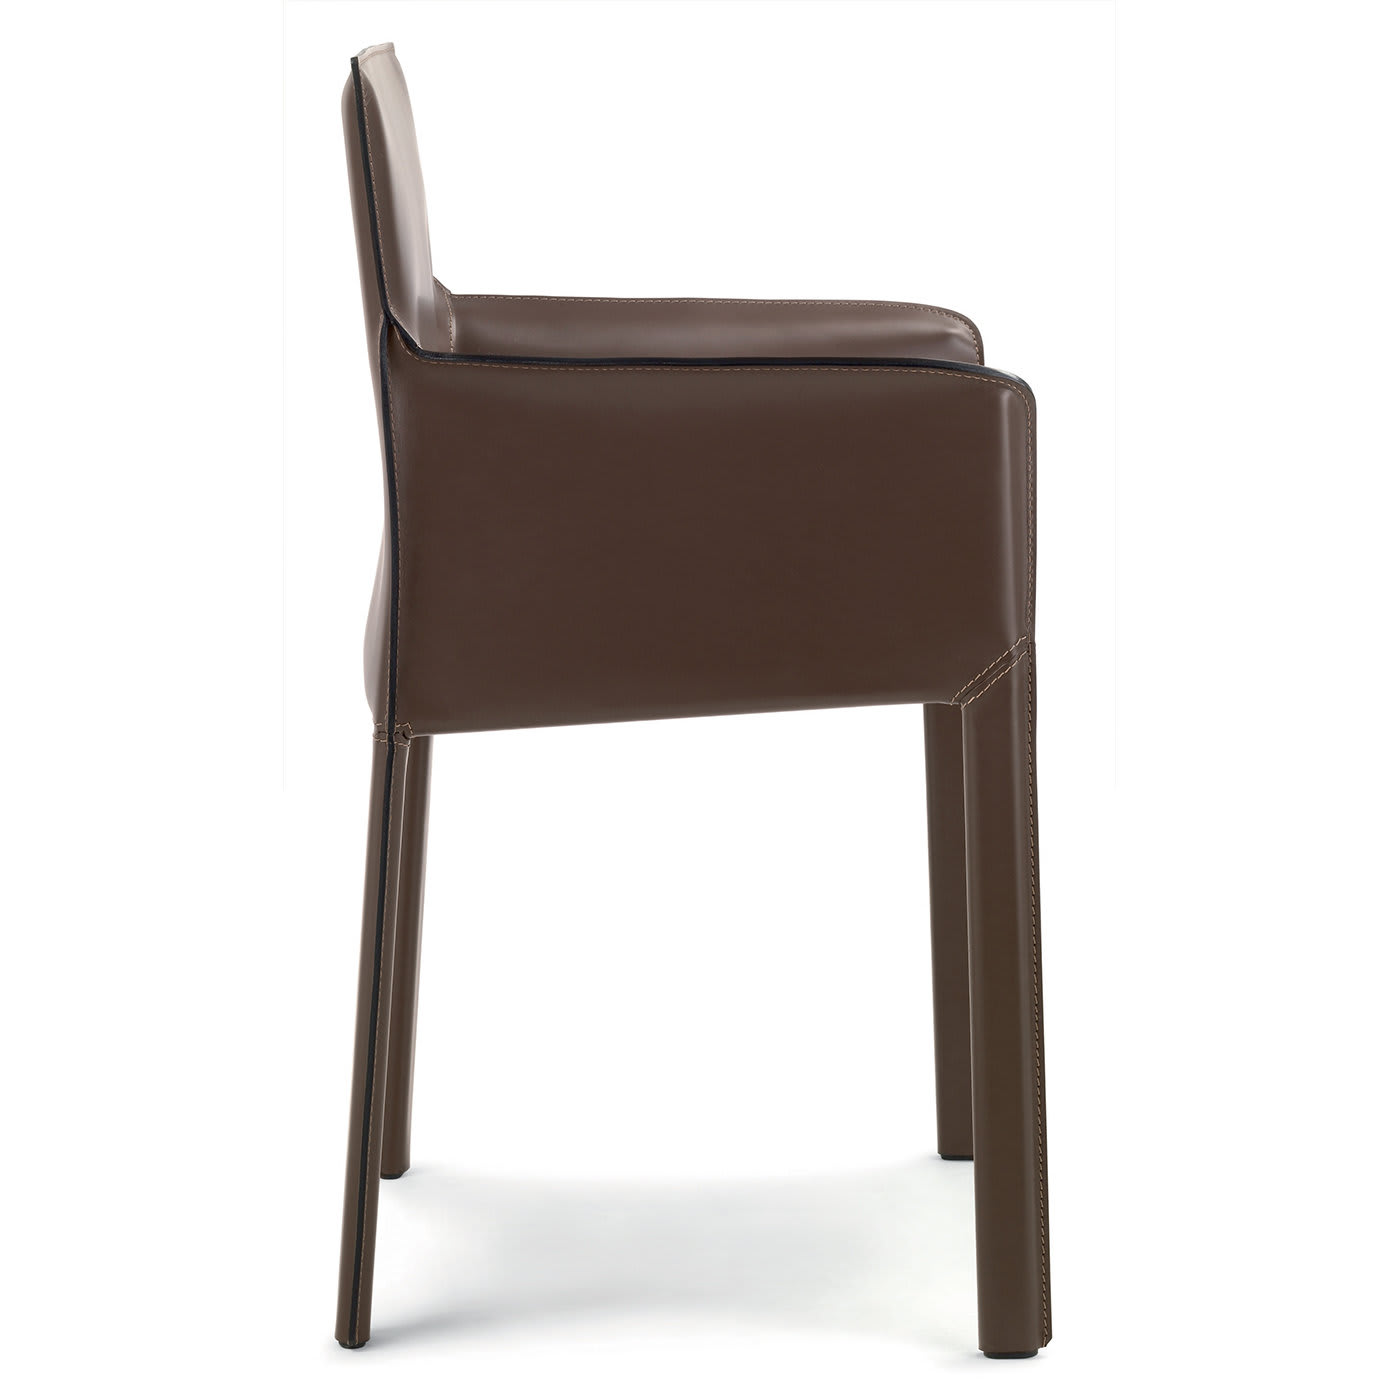 Pasqualina Chair by Grassi&Bianchi - Enrico Pellizzoni